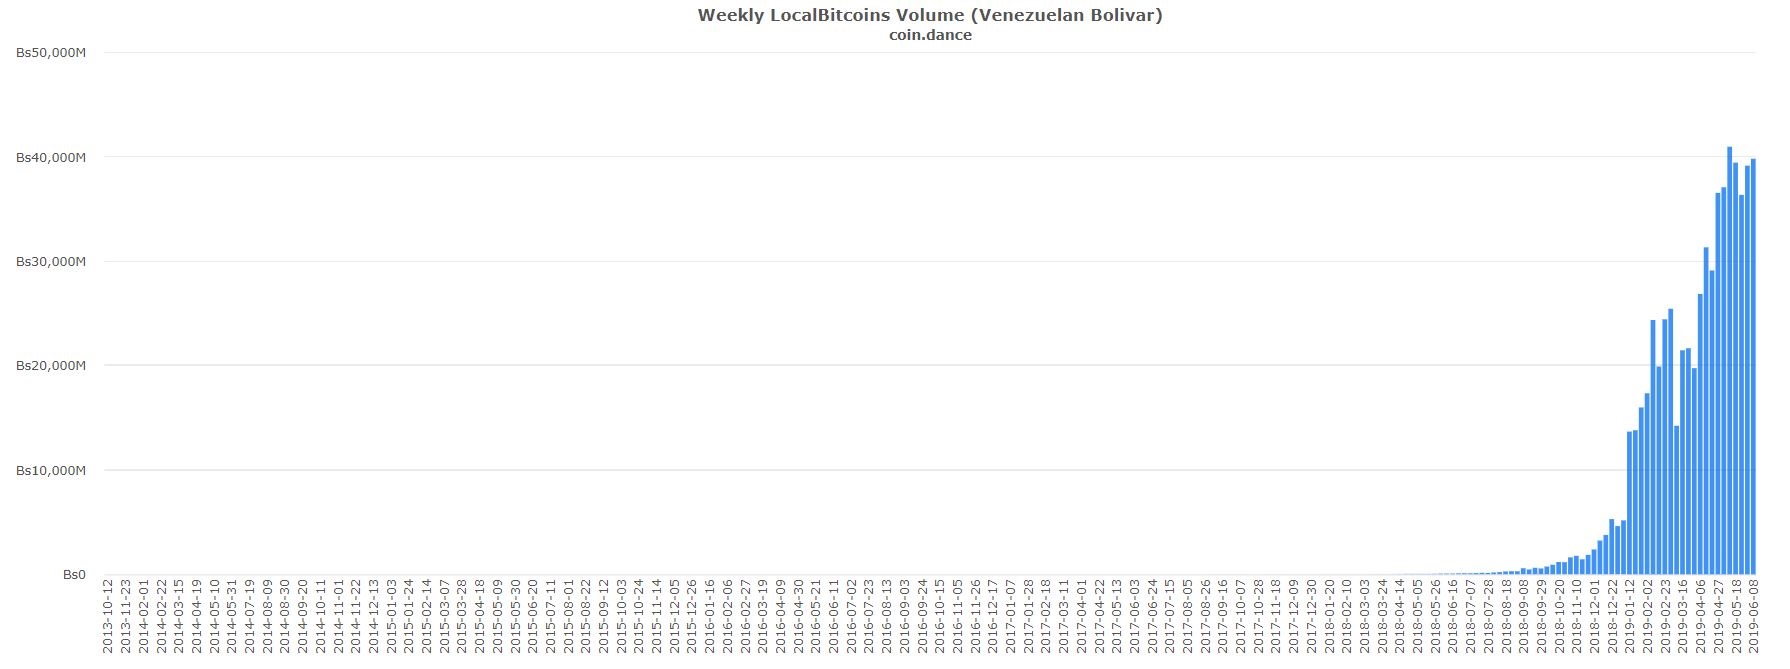 Bitcoin Volumes on LocalBitcoins Venezuela